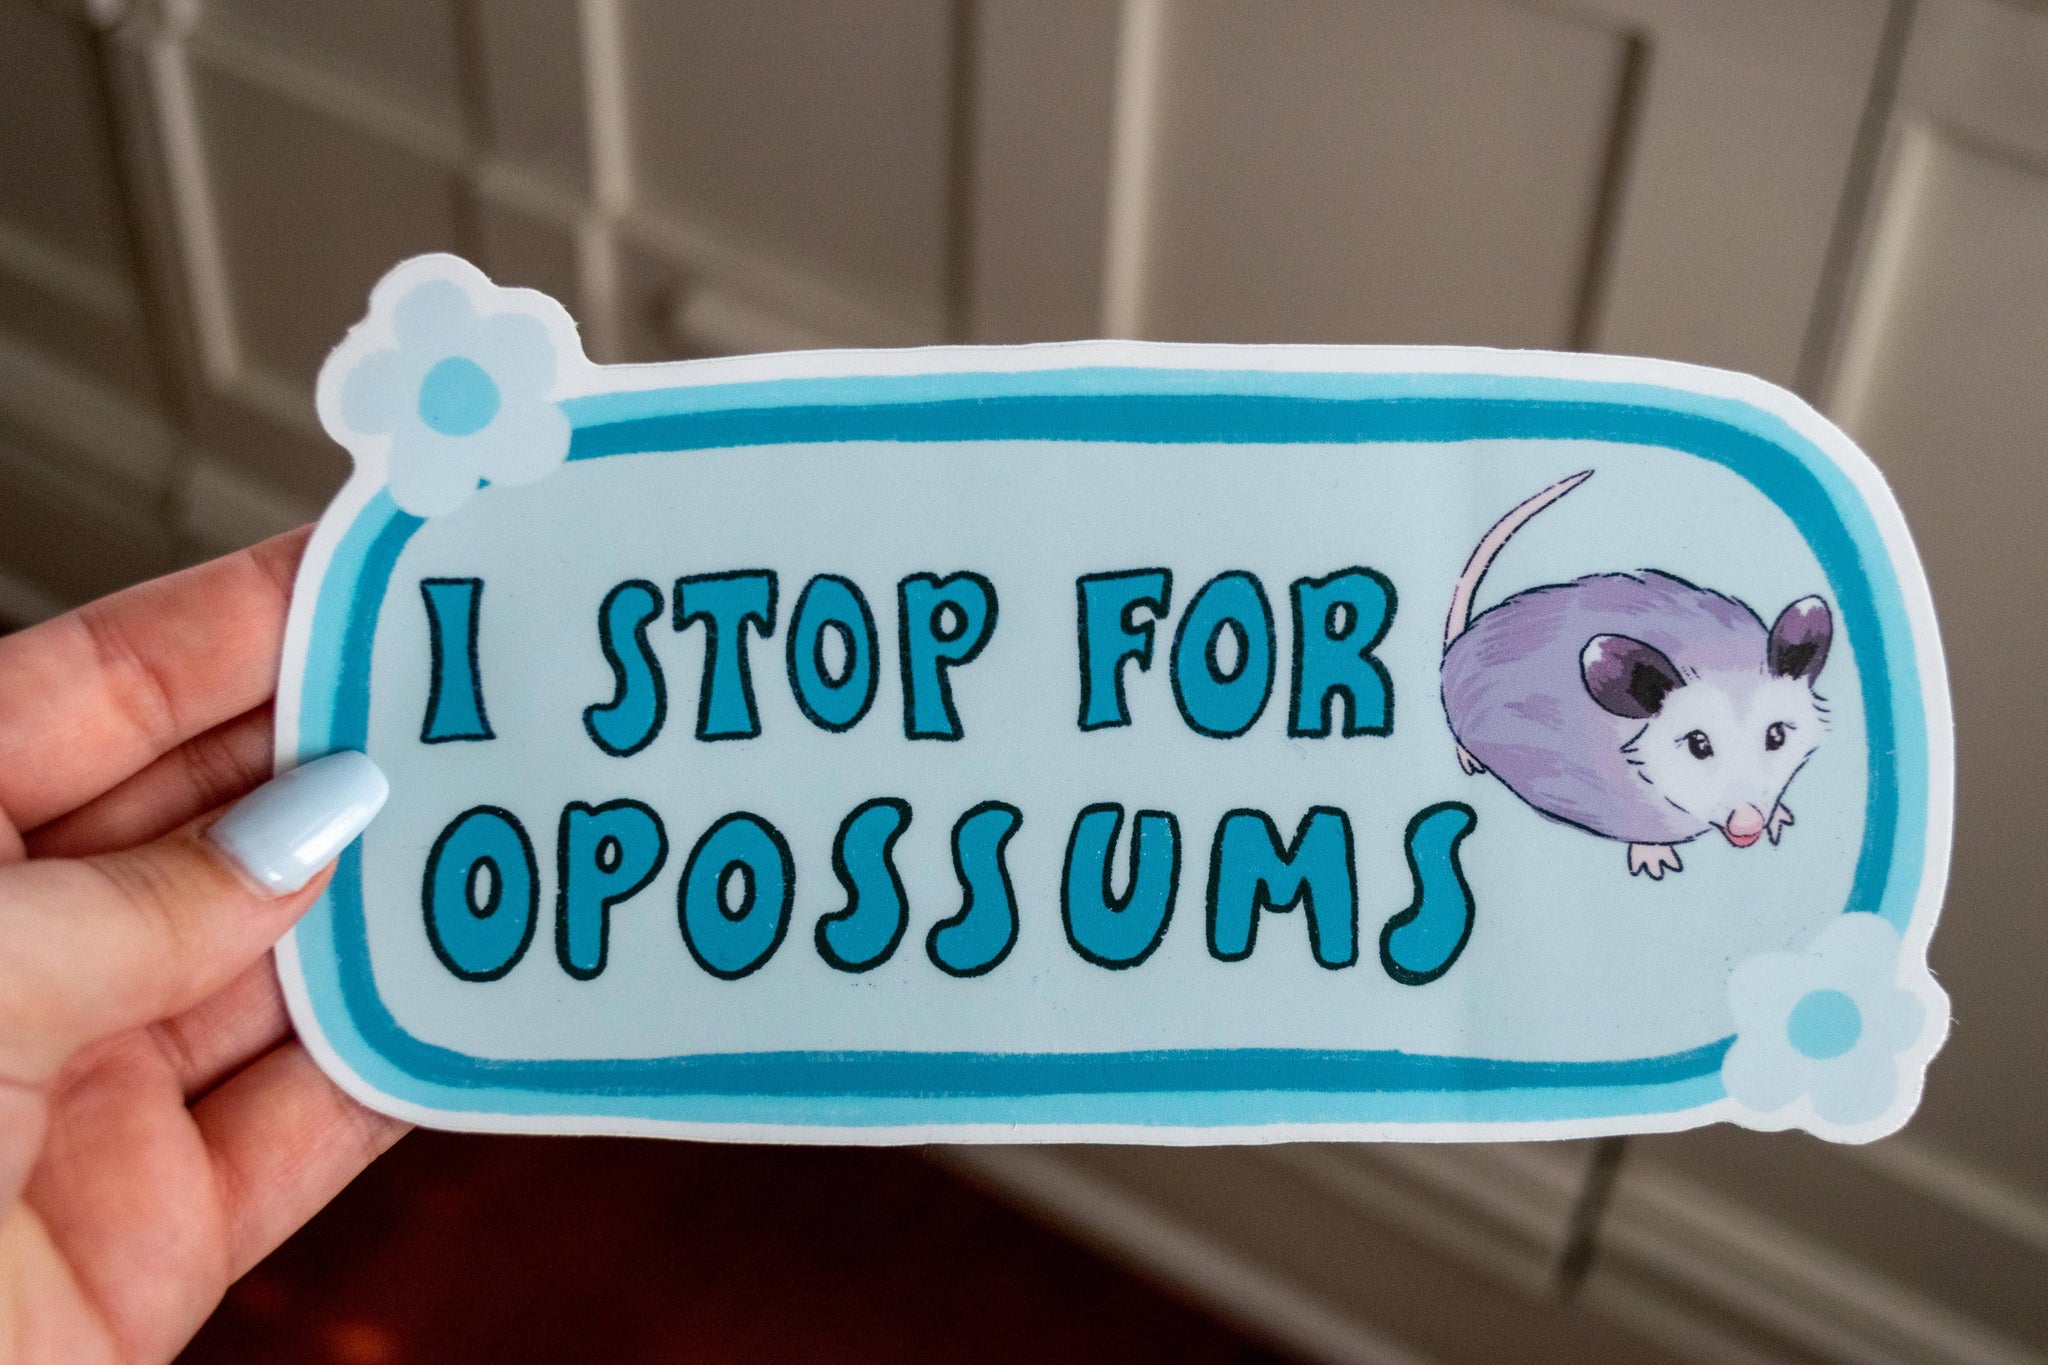 I Stop For Opossums Bumper Sticker